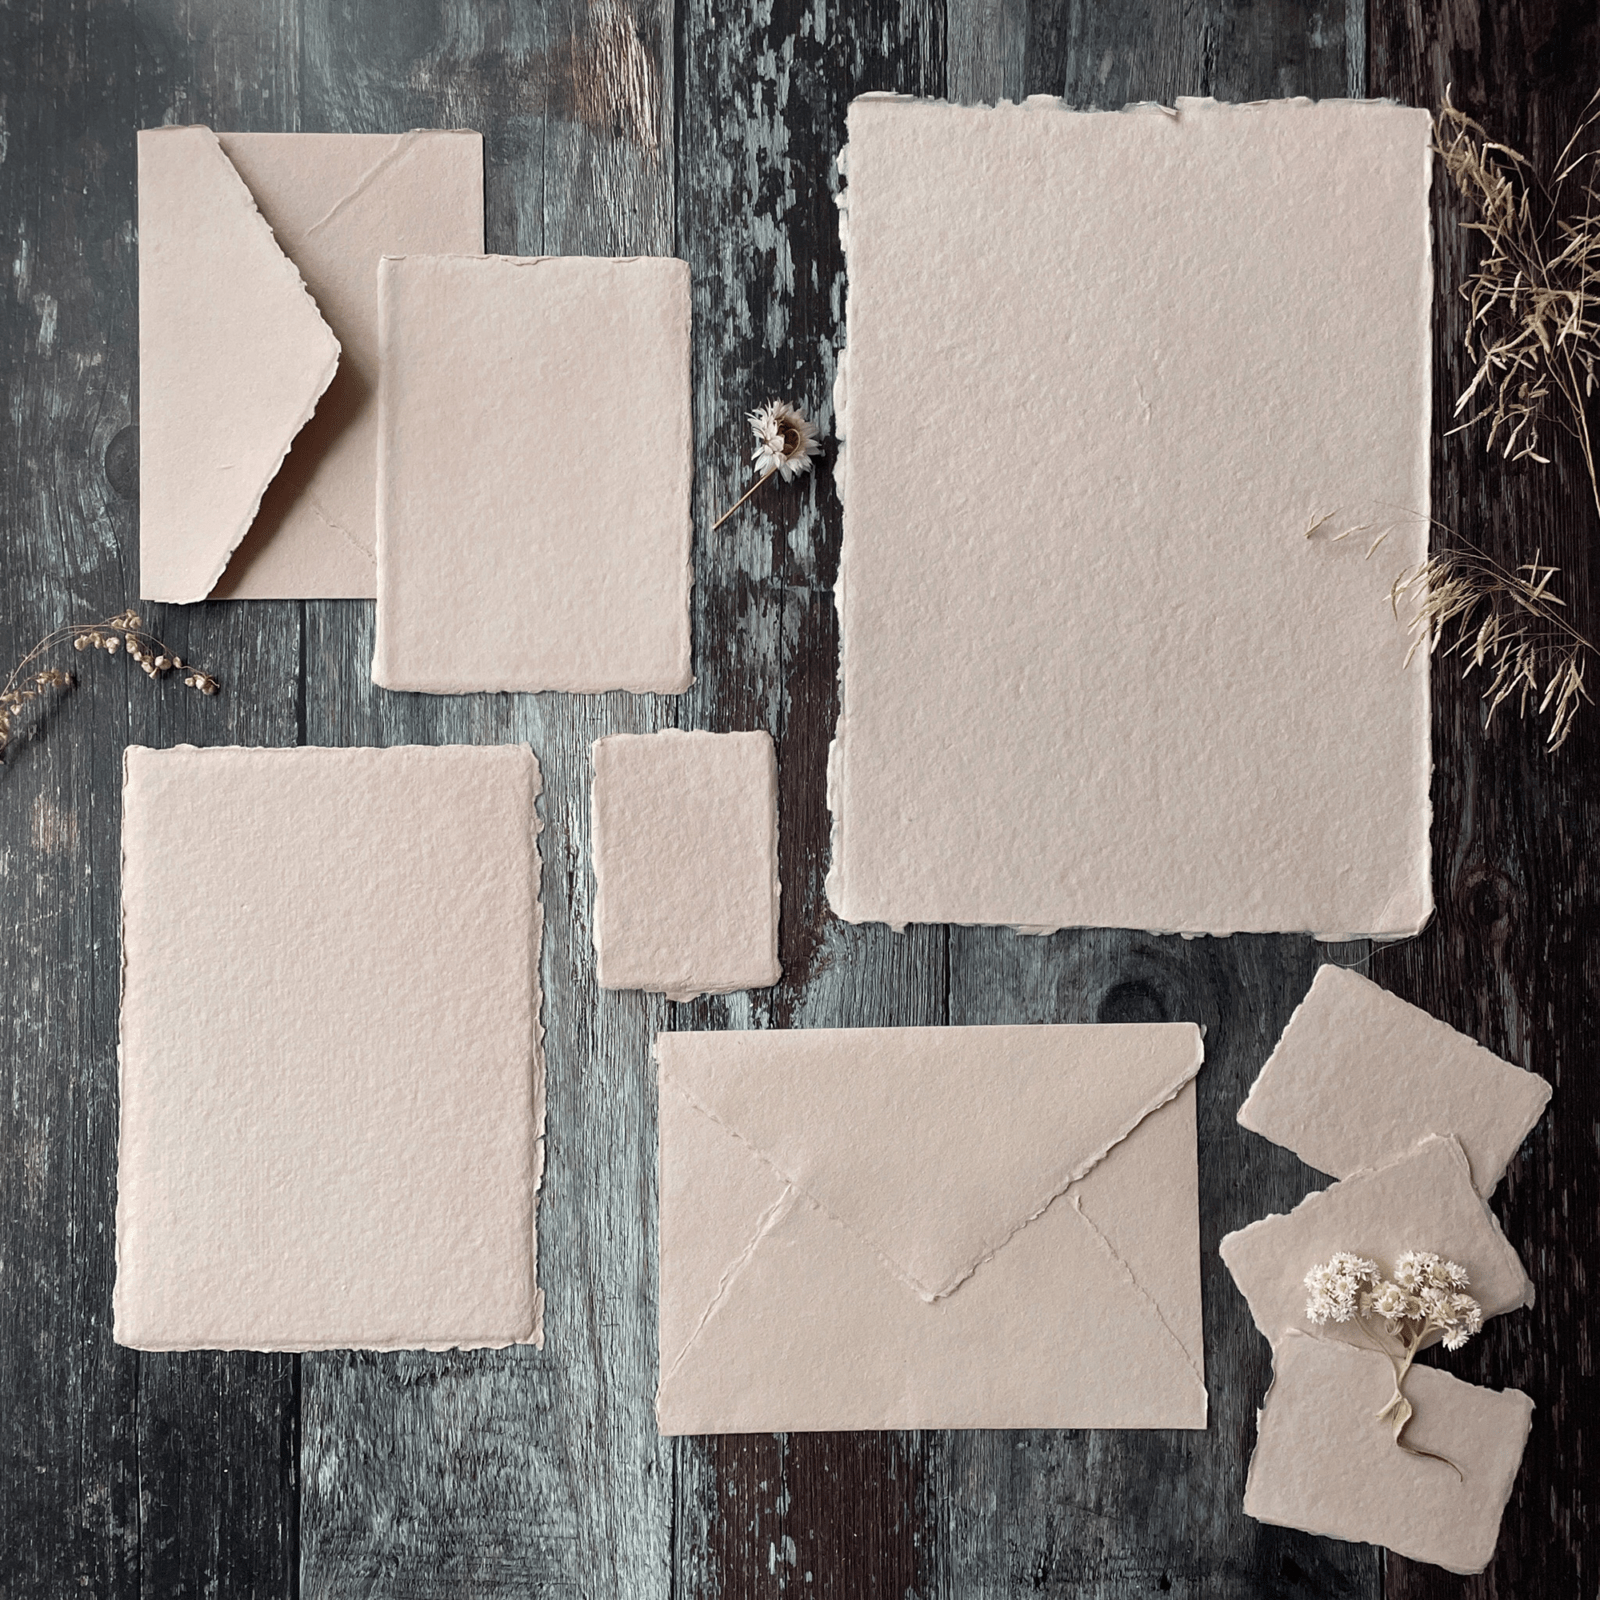 blush-pink-handmade-card-paper-and-envelopes